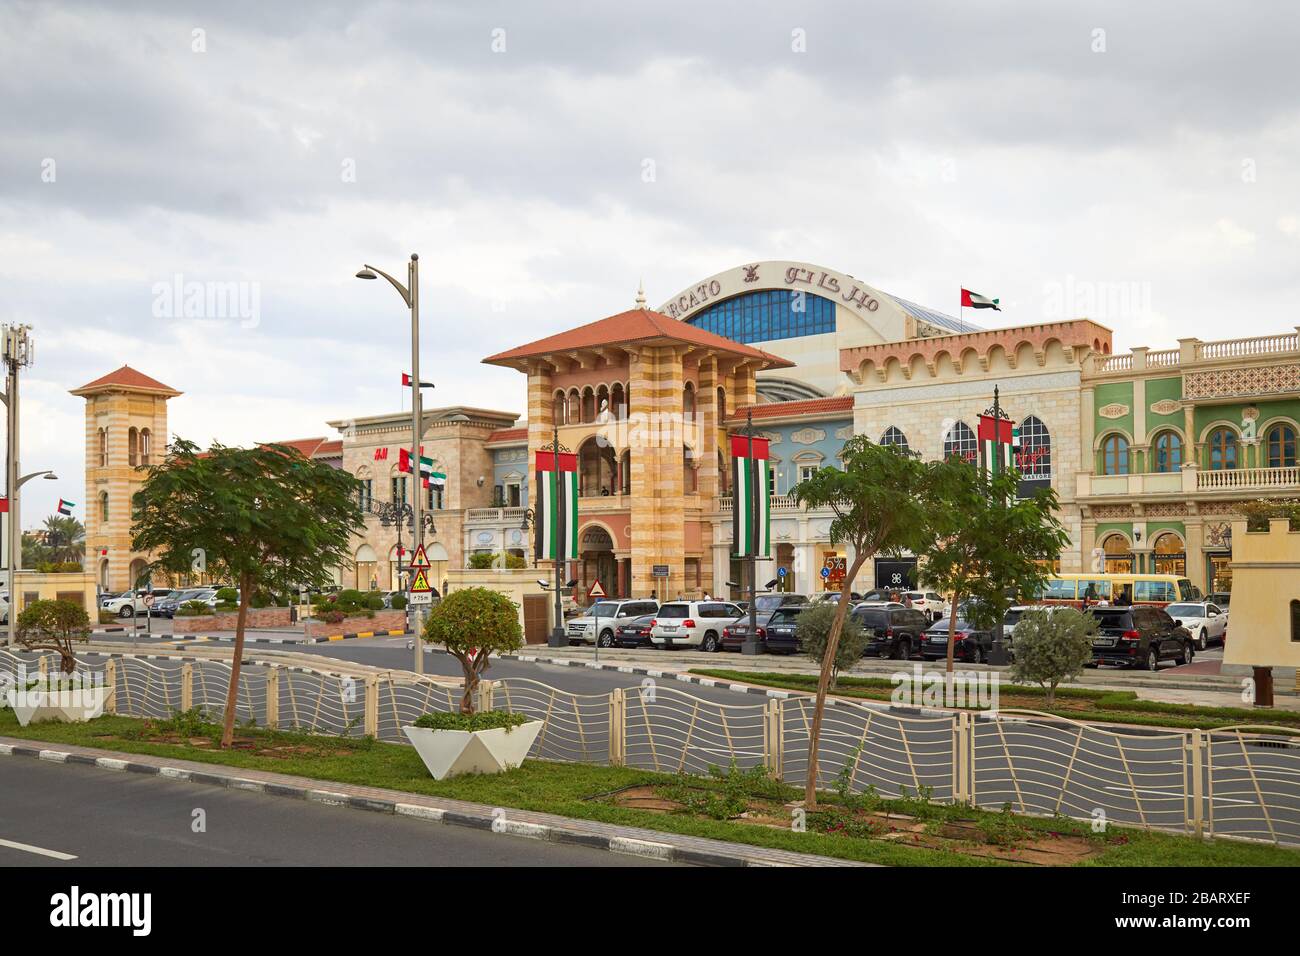 DUBAI, UNITED ARAB EMIRATES - NOVEMBER 21, 2019: Mercato shopping mall, Renaissance inspired building in Jumeirah area of Dubai Stock Photo